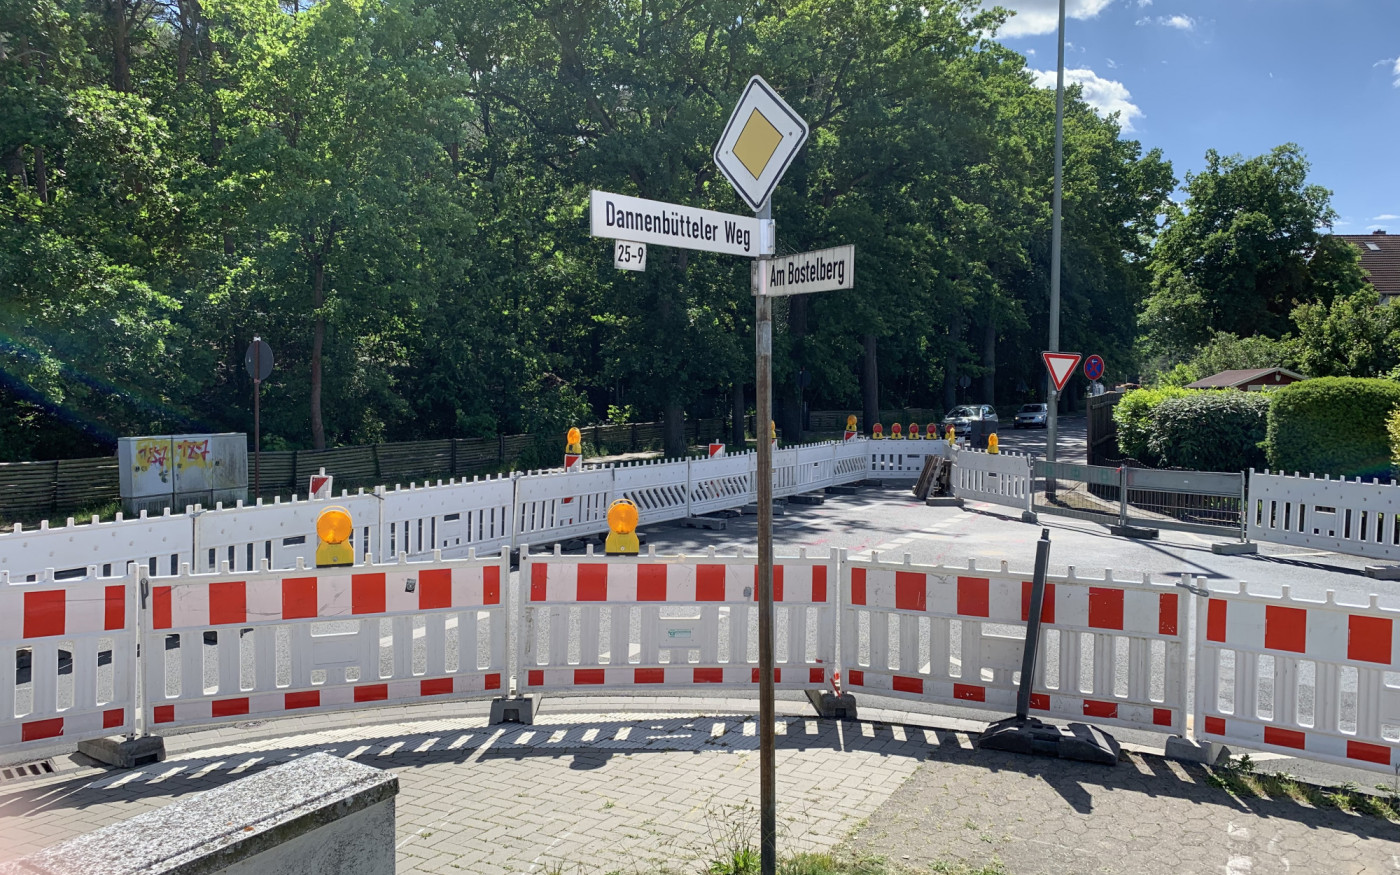 Achtung, der Kanal ist eingebrochen - Dannenbütteler Weg halbseitig gesperrt